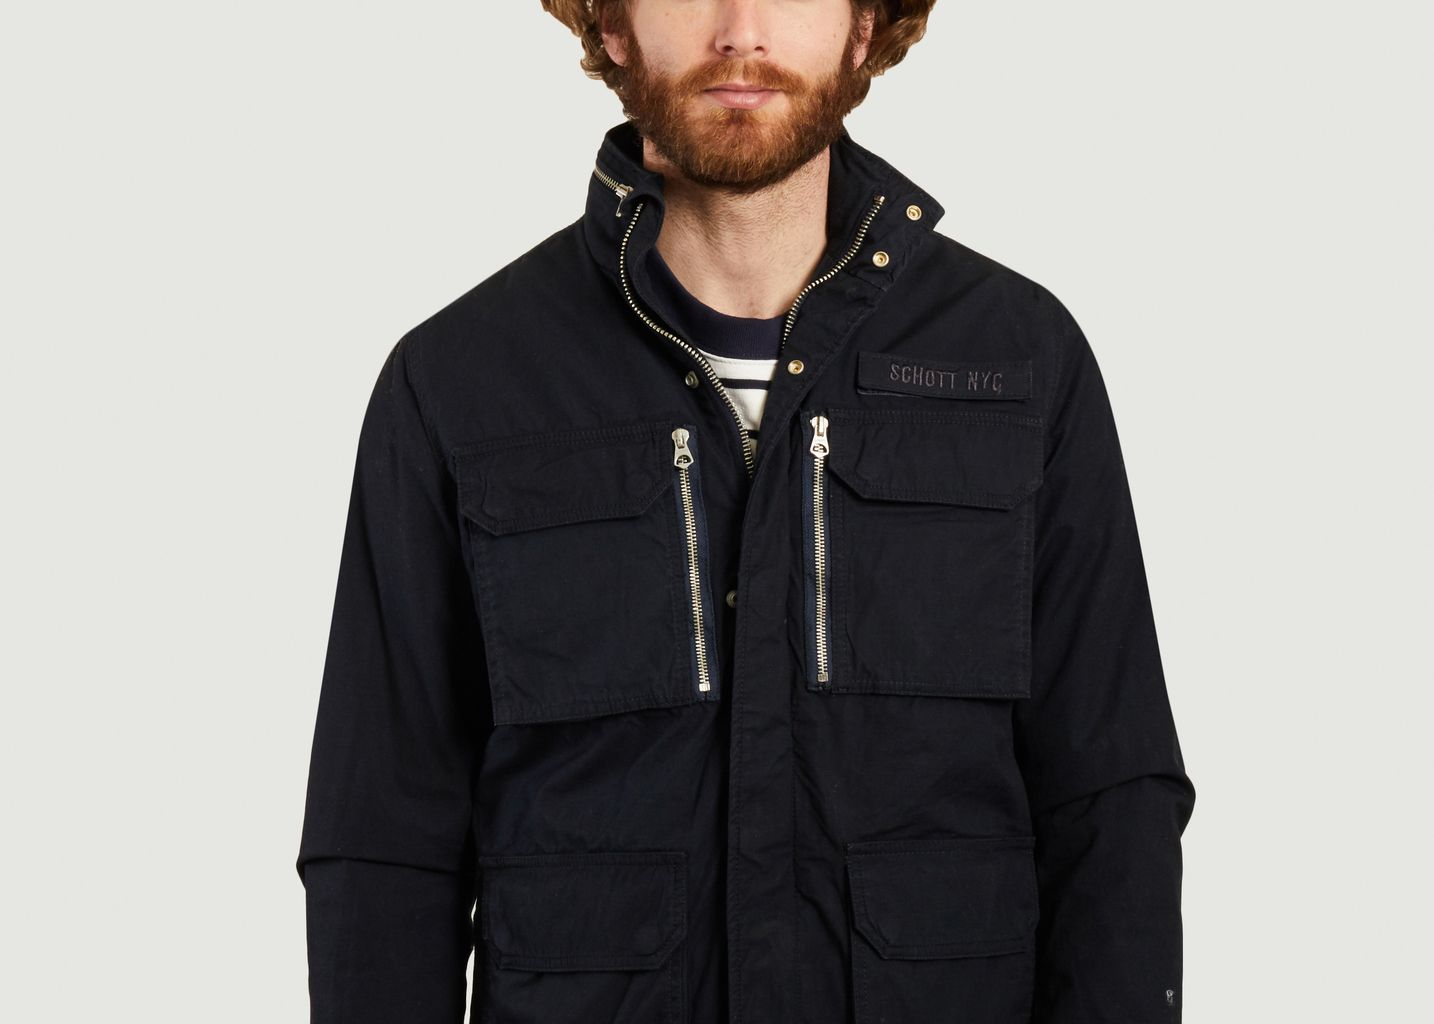 Fielda 2 canvas jacket with pockets - Schott NYC